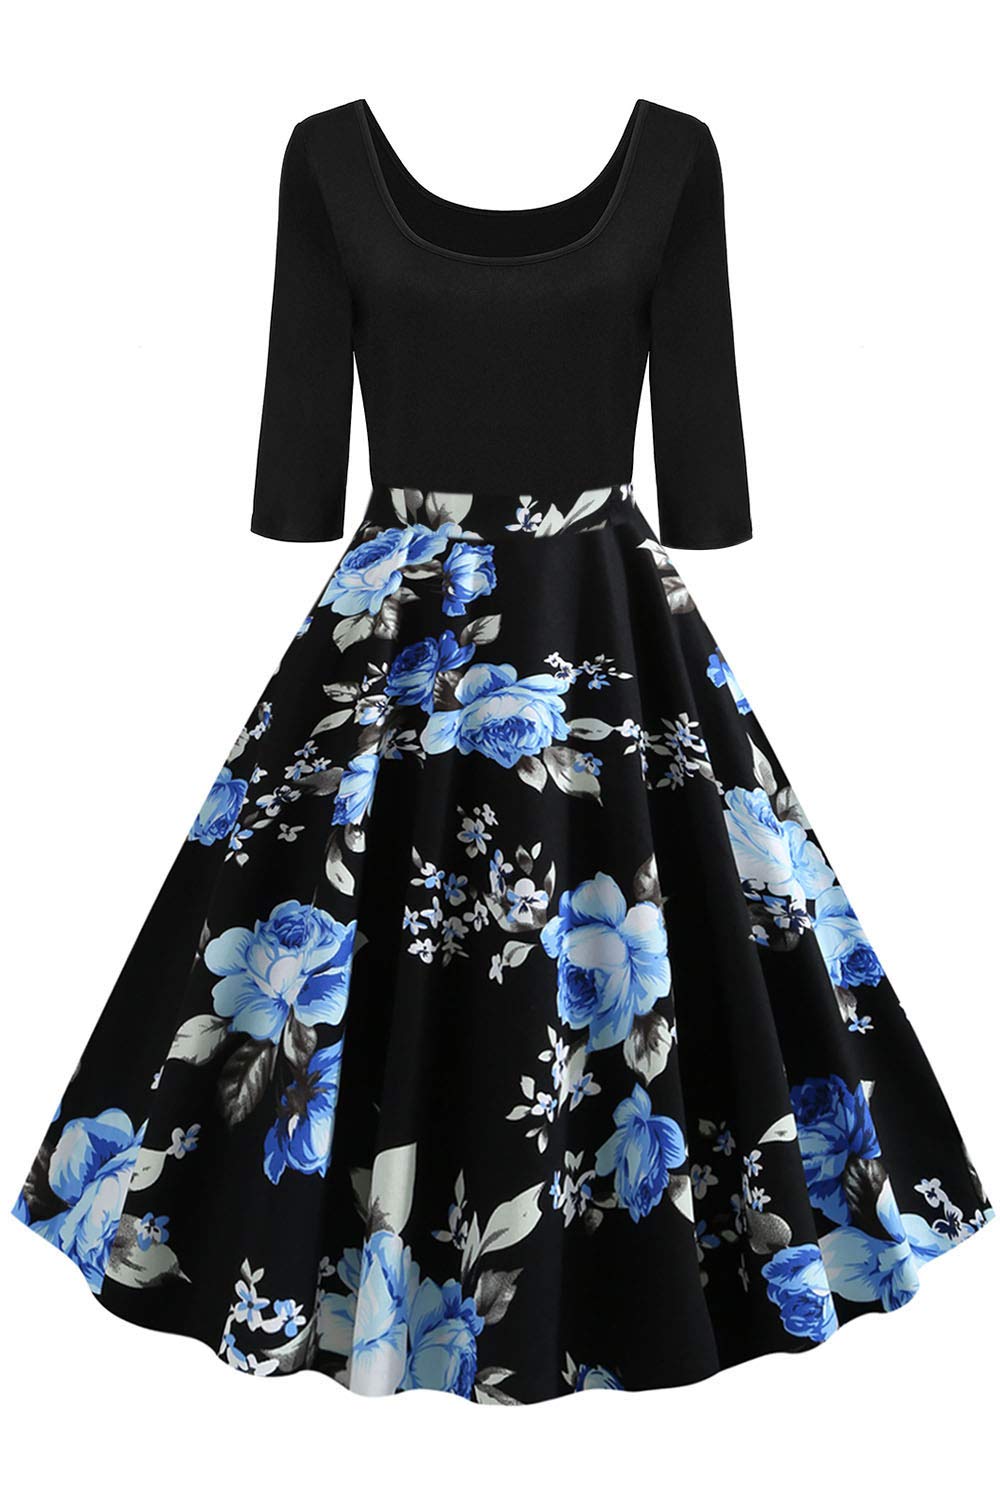 AXOE Damen 50er Jahre Kleid Rockabilly Vintage Festkleid 3/4 Ärmel Farbe 13, Gr.46, 3XL